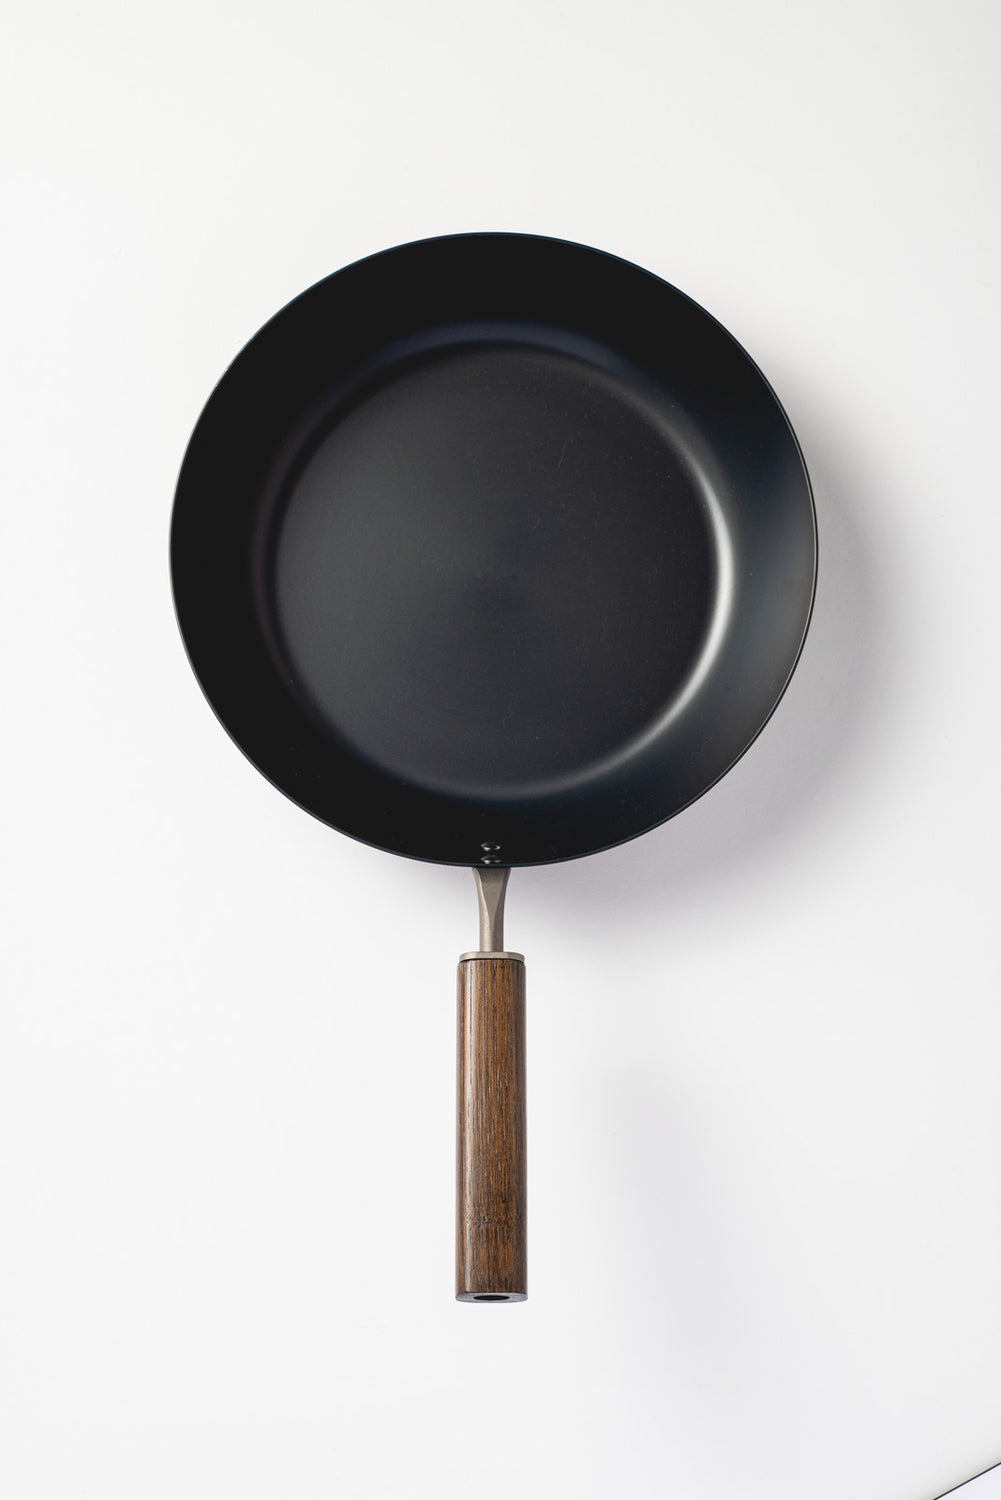 Kitchen Craft Non Stick Frying Pan, Set of 2 (24 cm/28 cm)